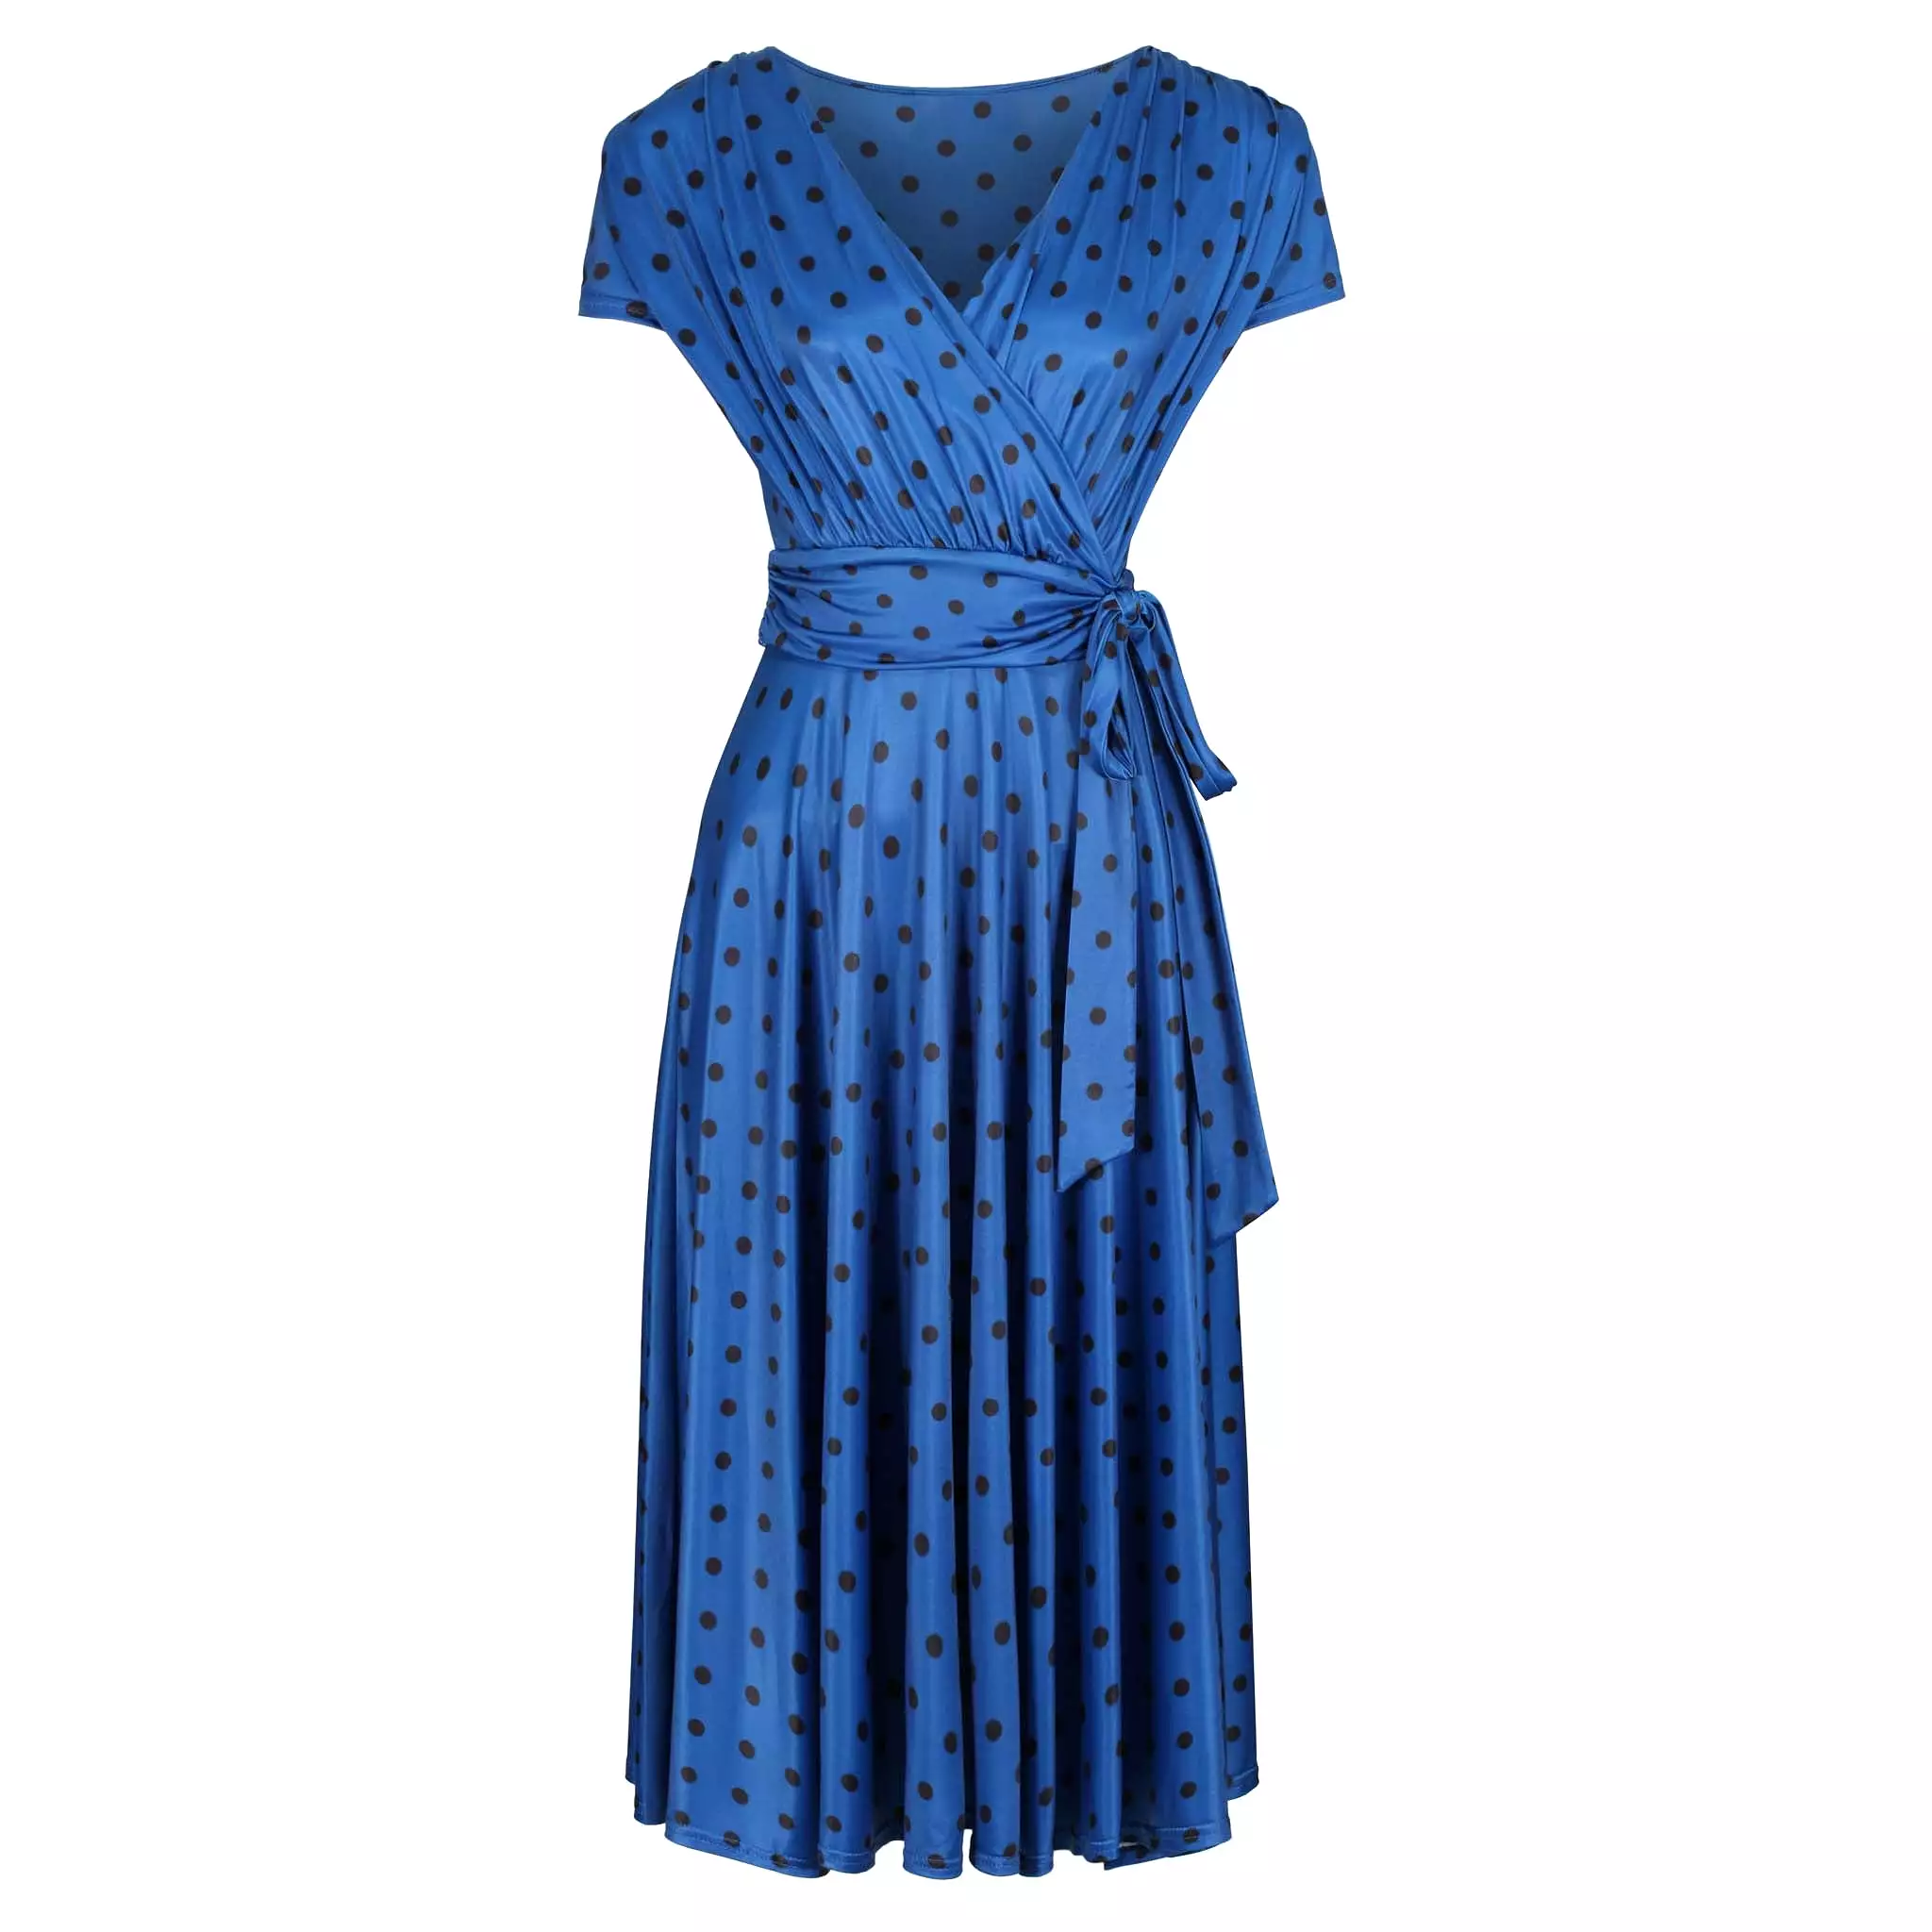 Classic Royal Blue Polka Dot Cap Sleeve Fit And Flare Midi Dress